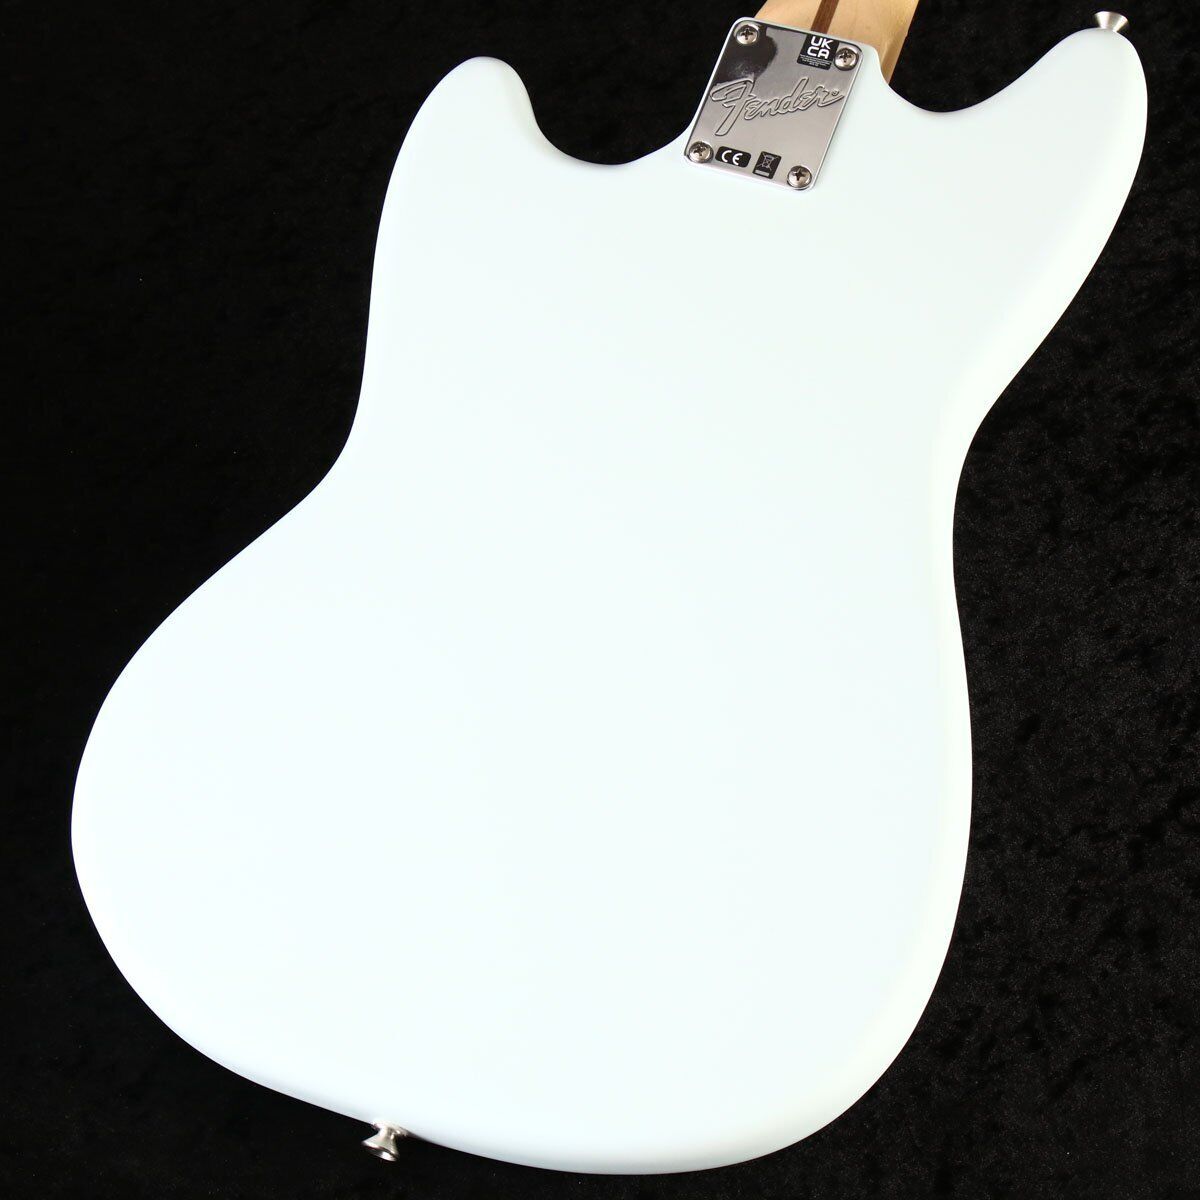 Fender American Performer Mustang Rosewood Fingerboard Satin Sonic Blue